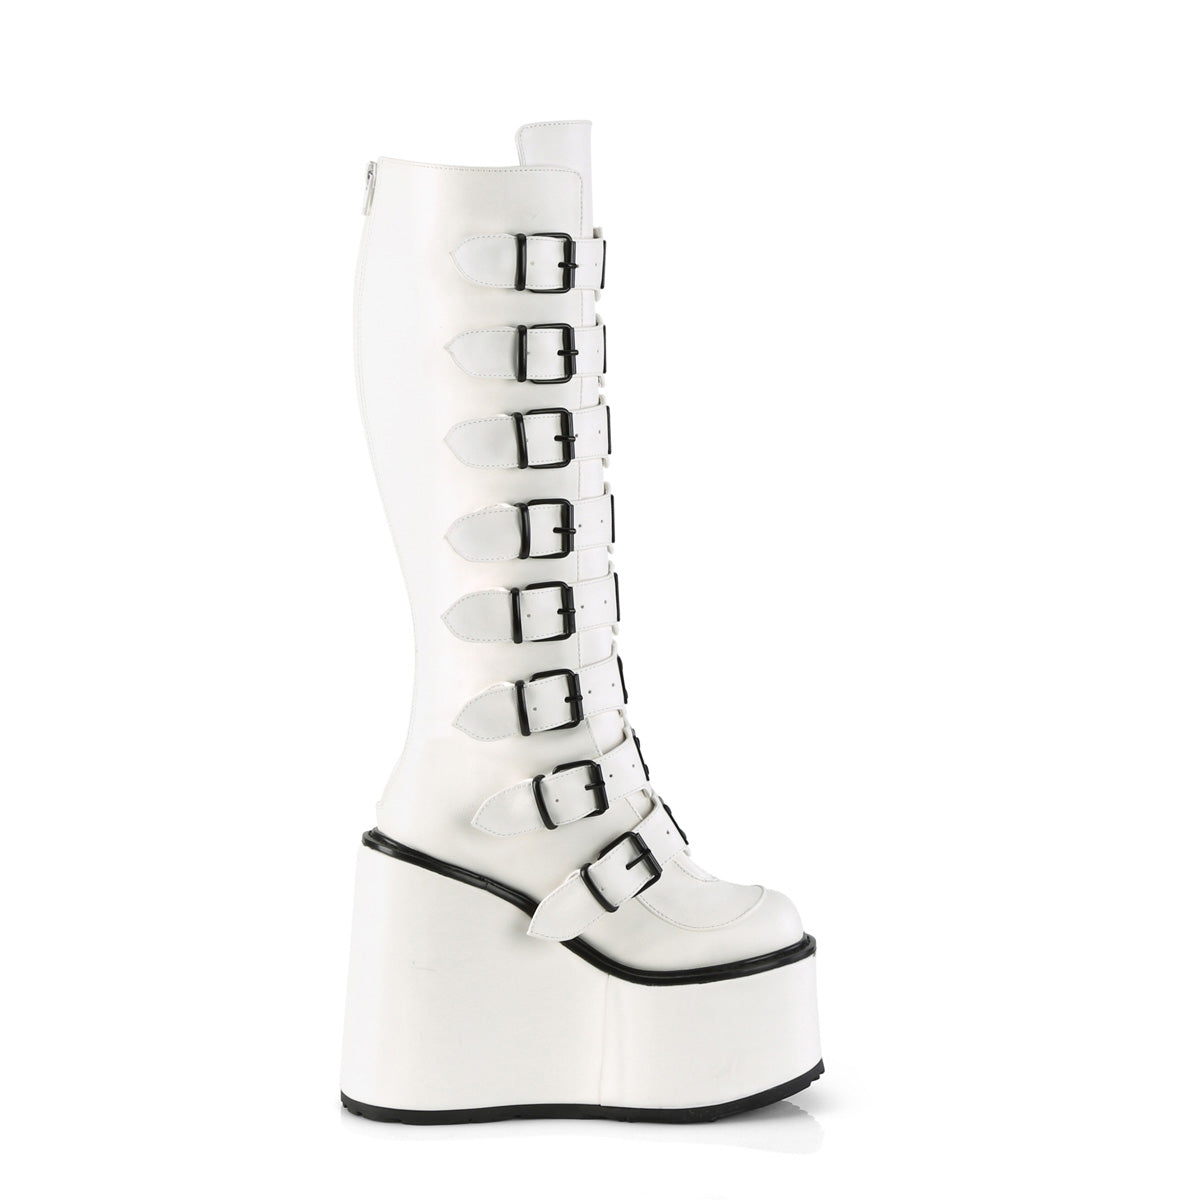 SWING-815 Demonia White Vegan Leather Women's Mid-Calf & Knee High Boots [Demonia Cult Alternative Footwear]